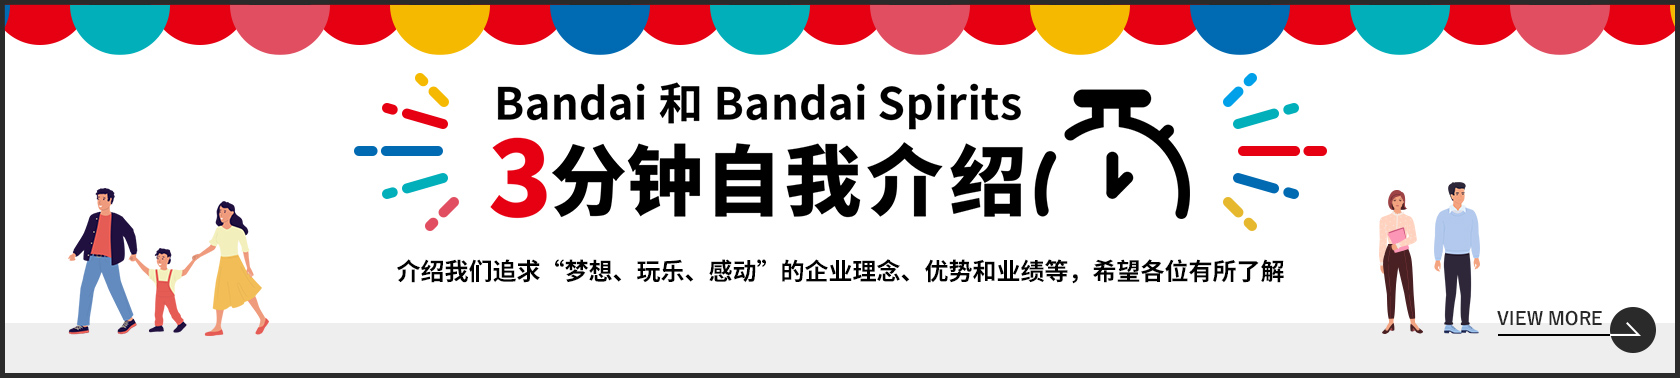 Bandai和Bandai Spirits 3分钟自我介绍